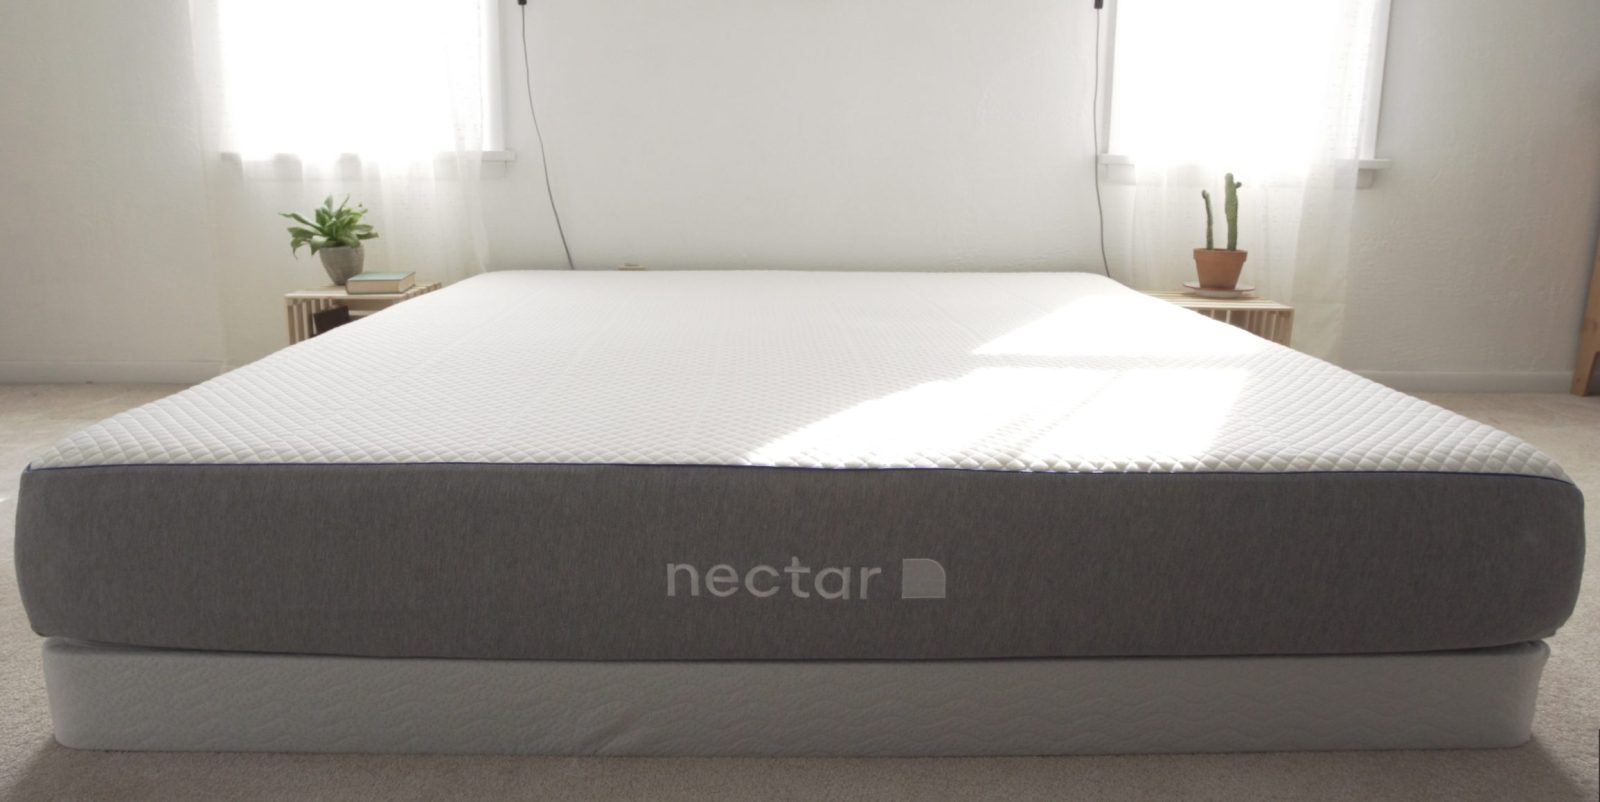 do all nectar mattresses come in a box